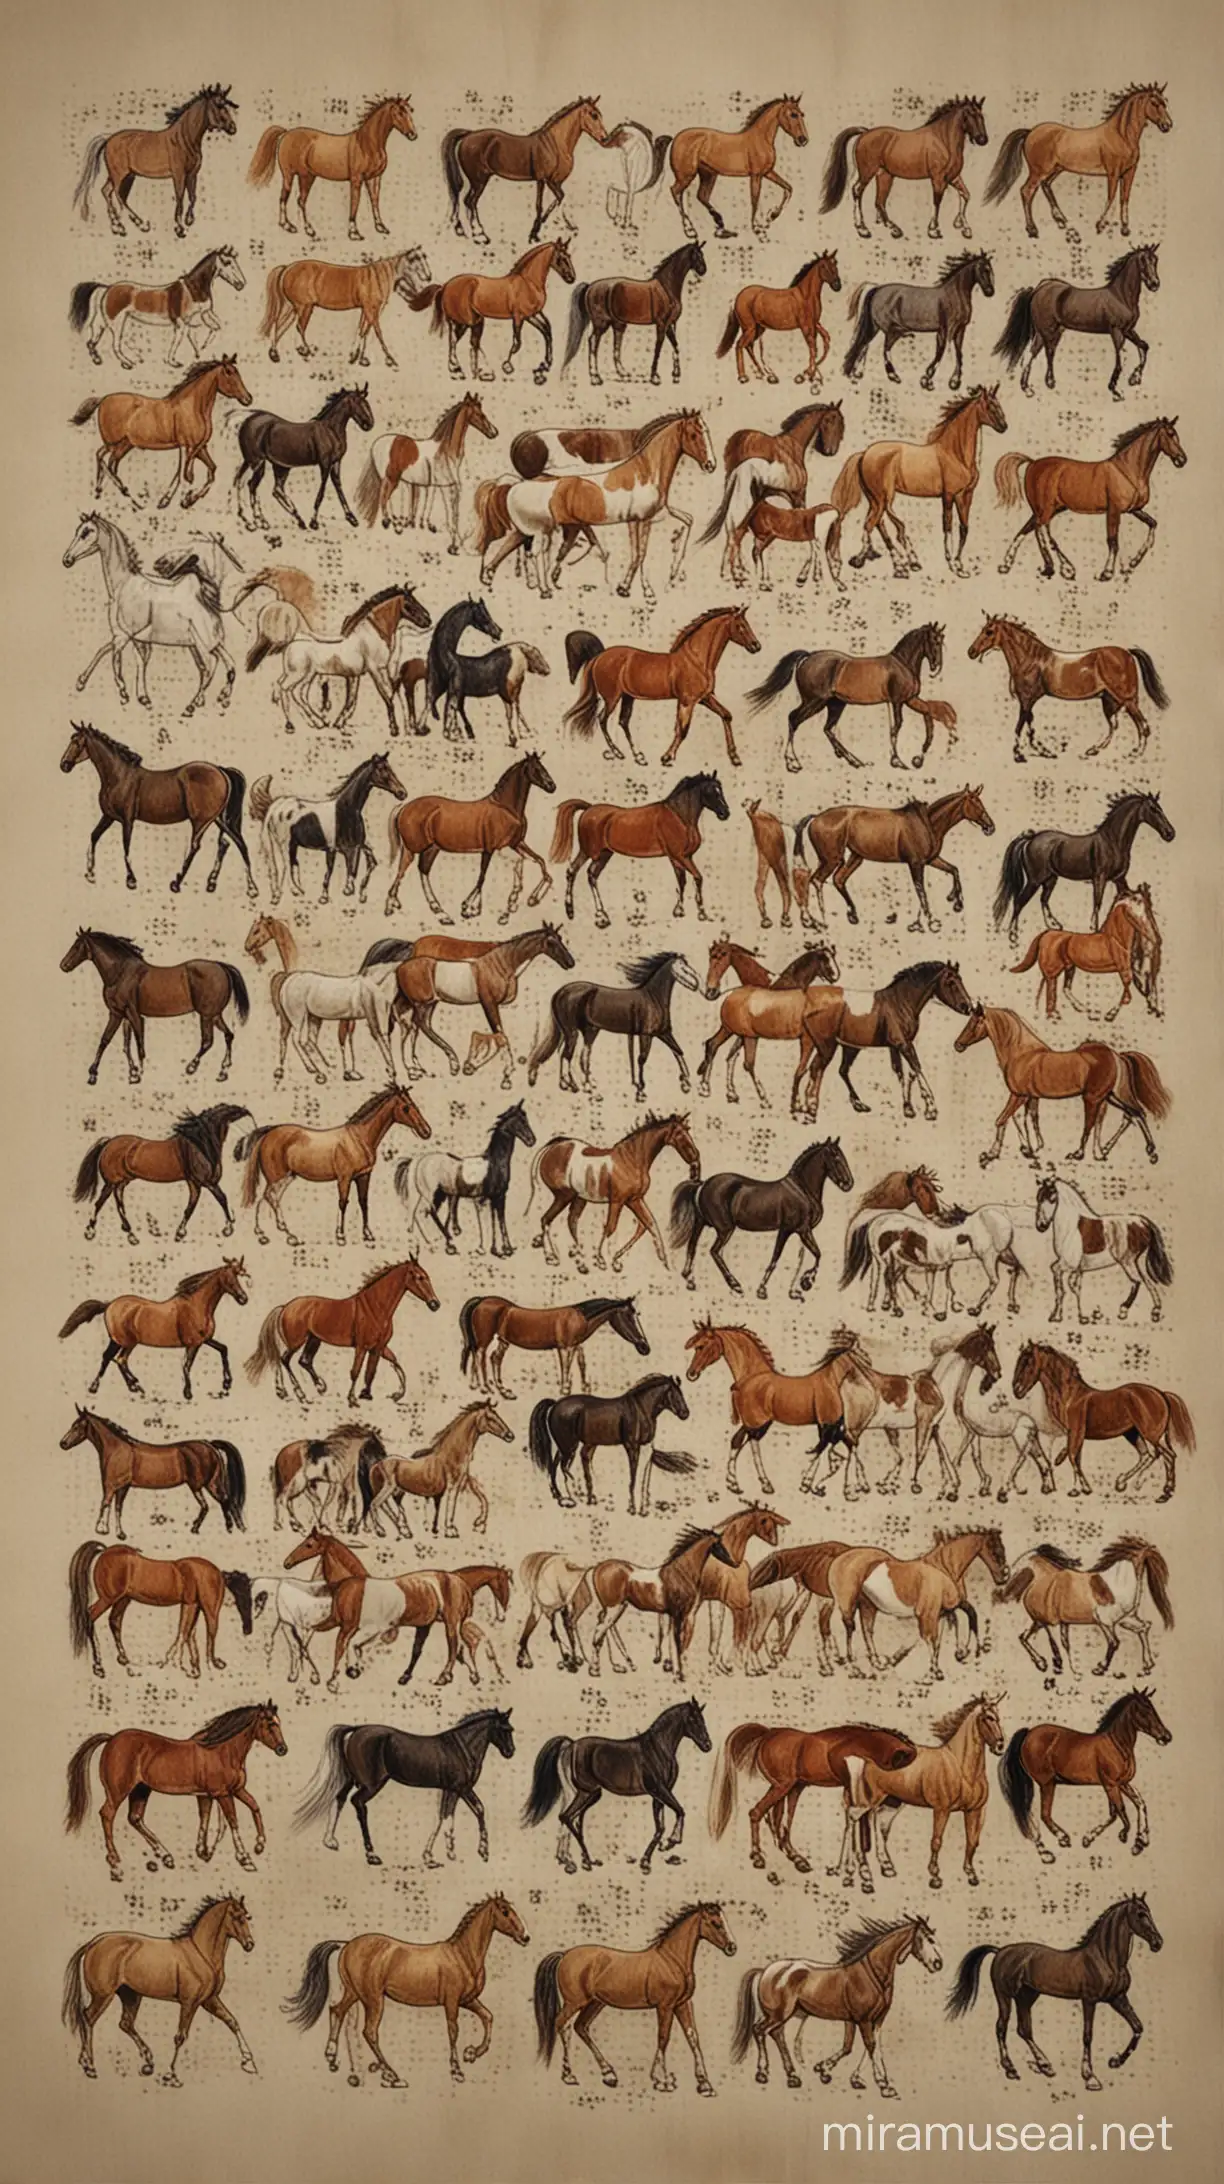 Majestic Herd of Seventeen Horses Galloping Across Golden Plains